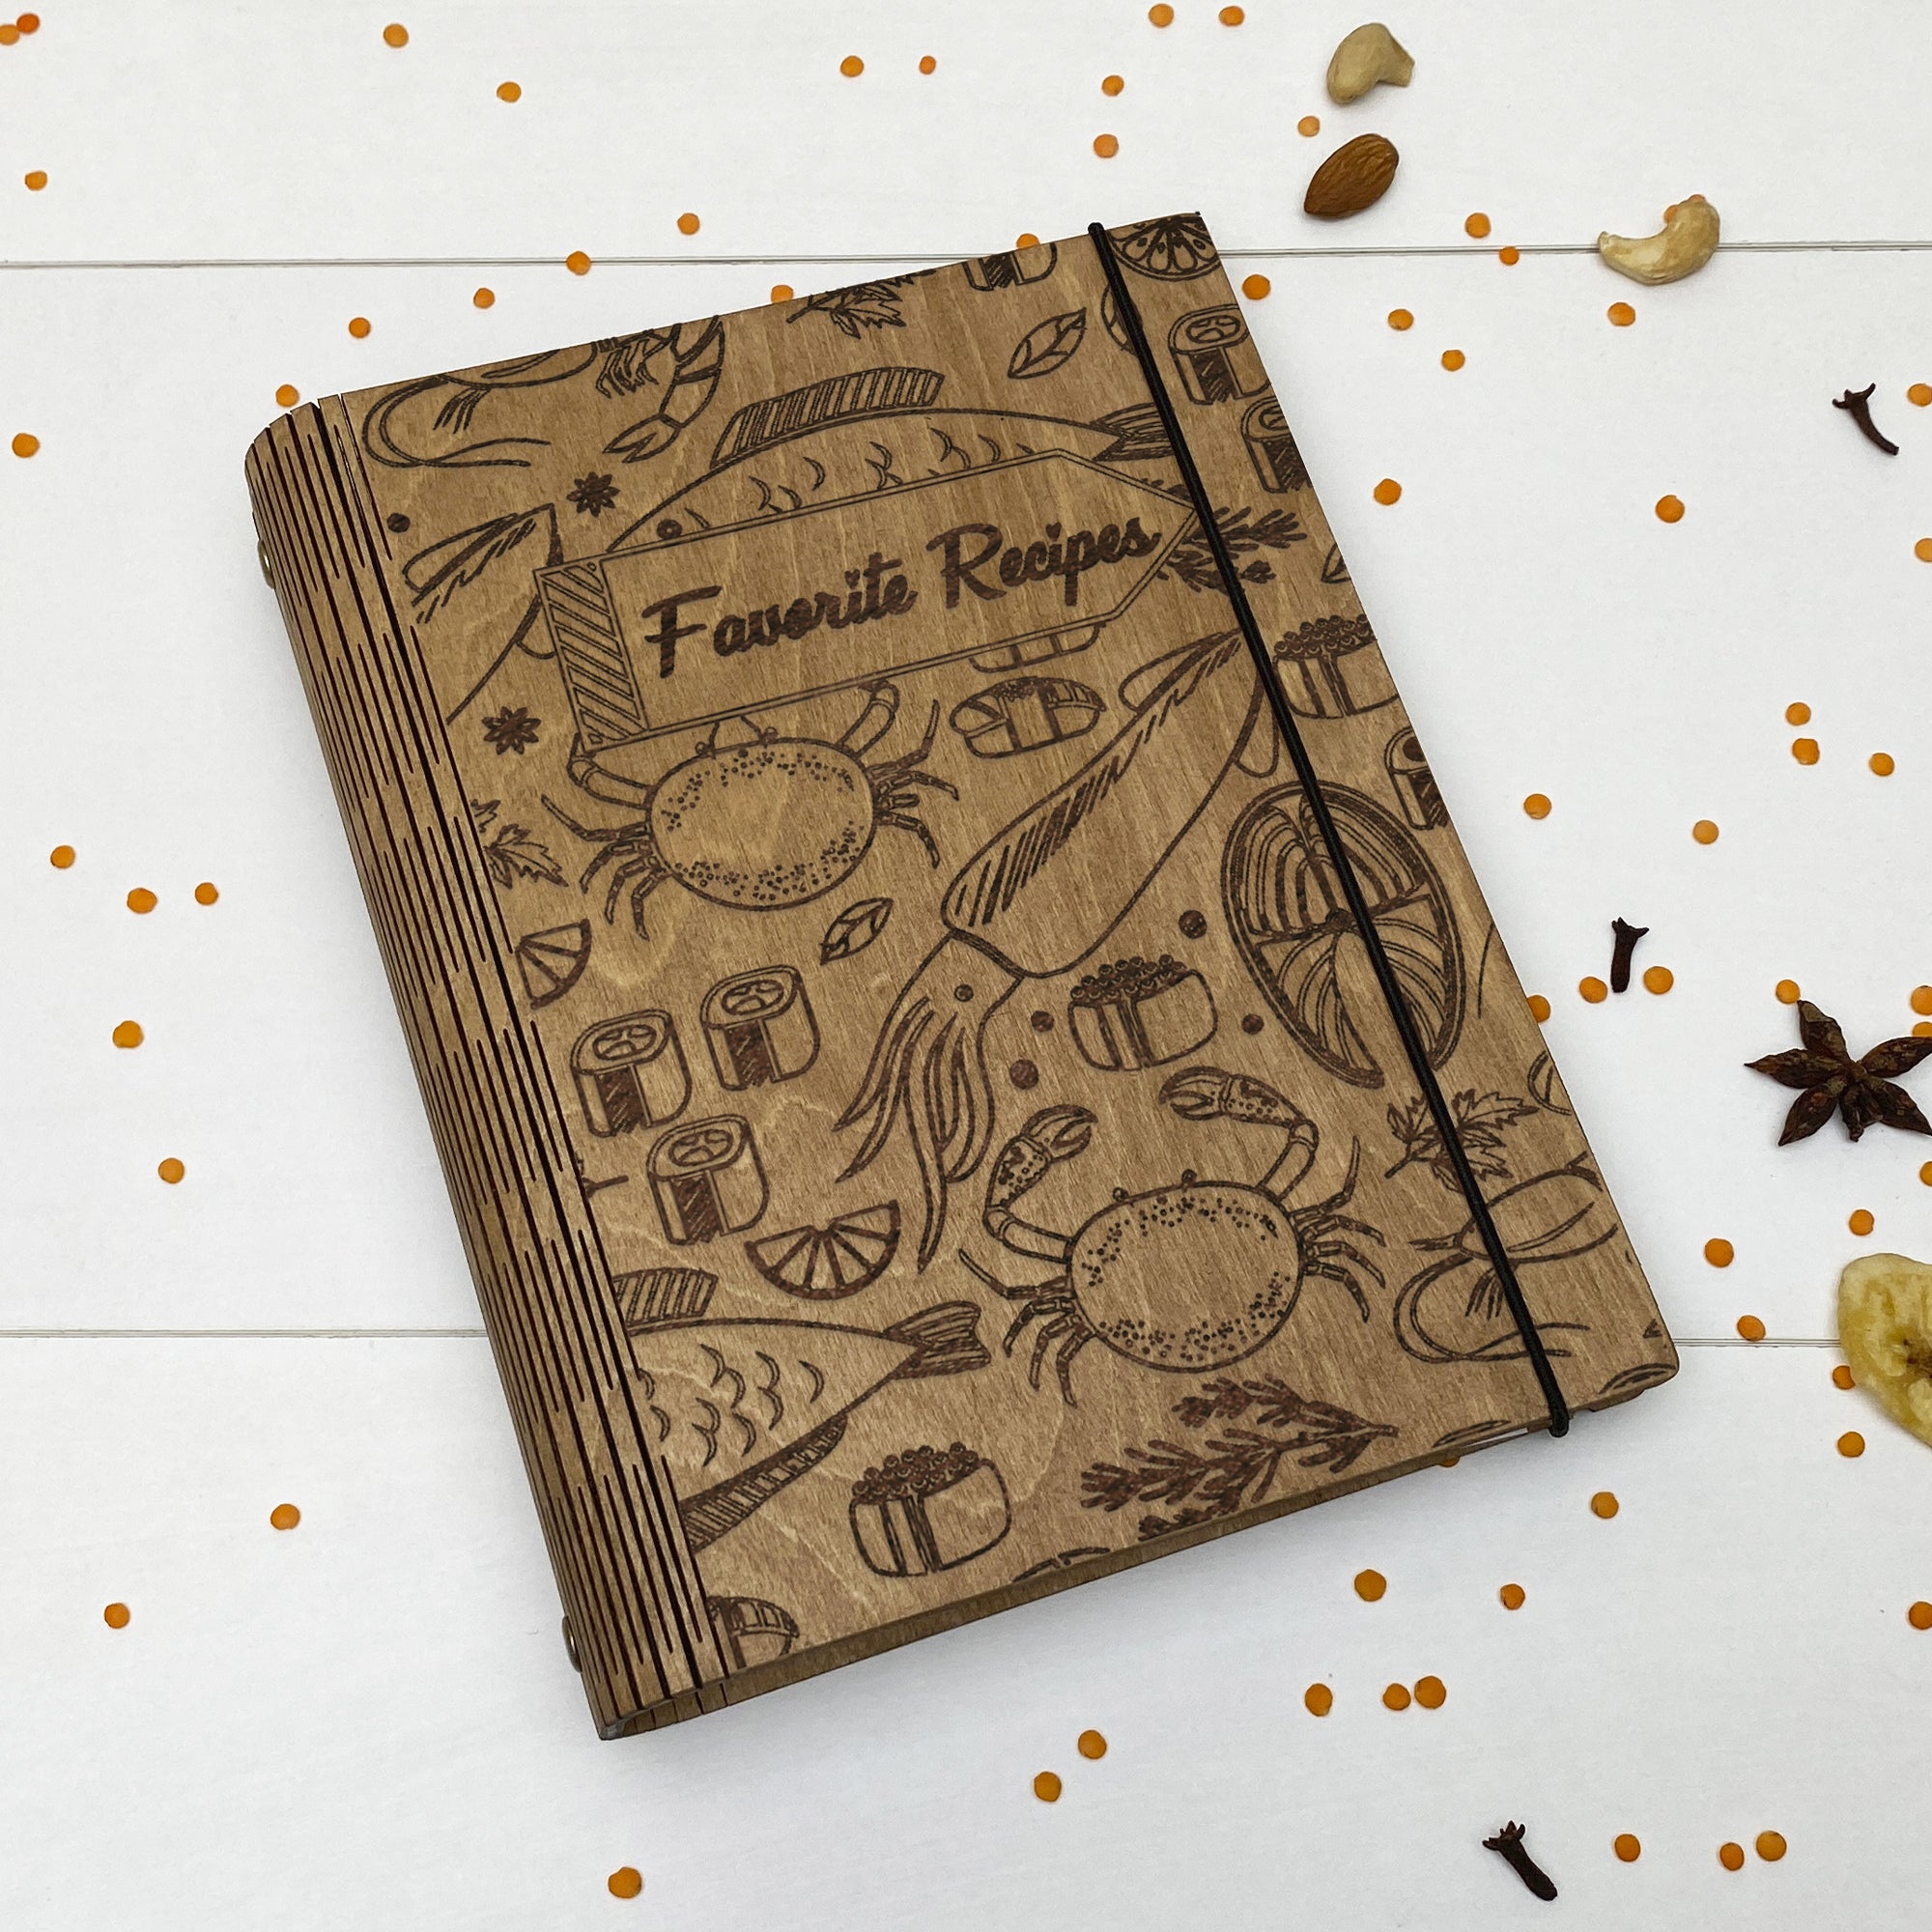 Personalized Recipe Book Free custom engraving – skinwoodukraine